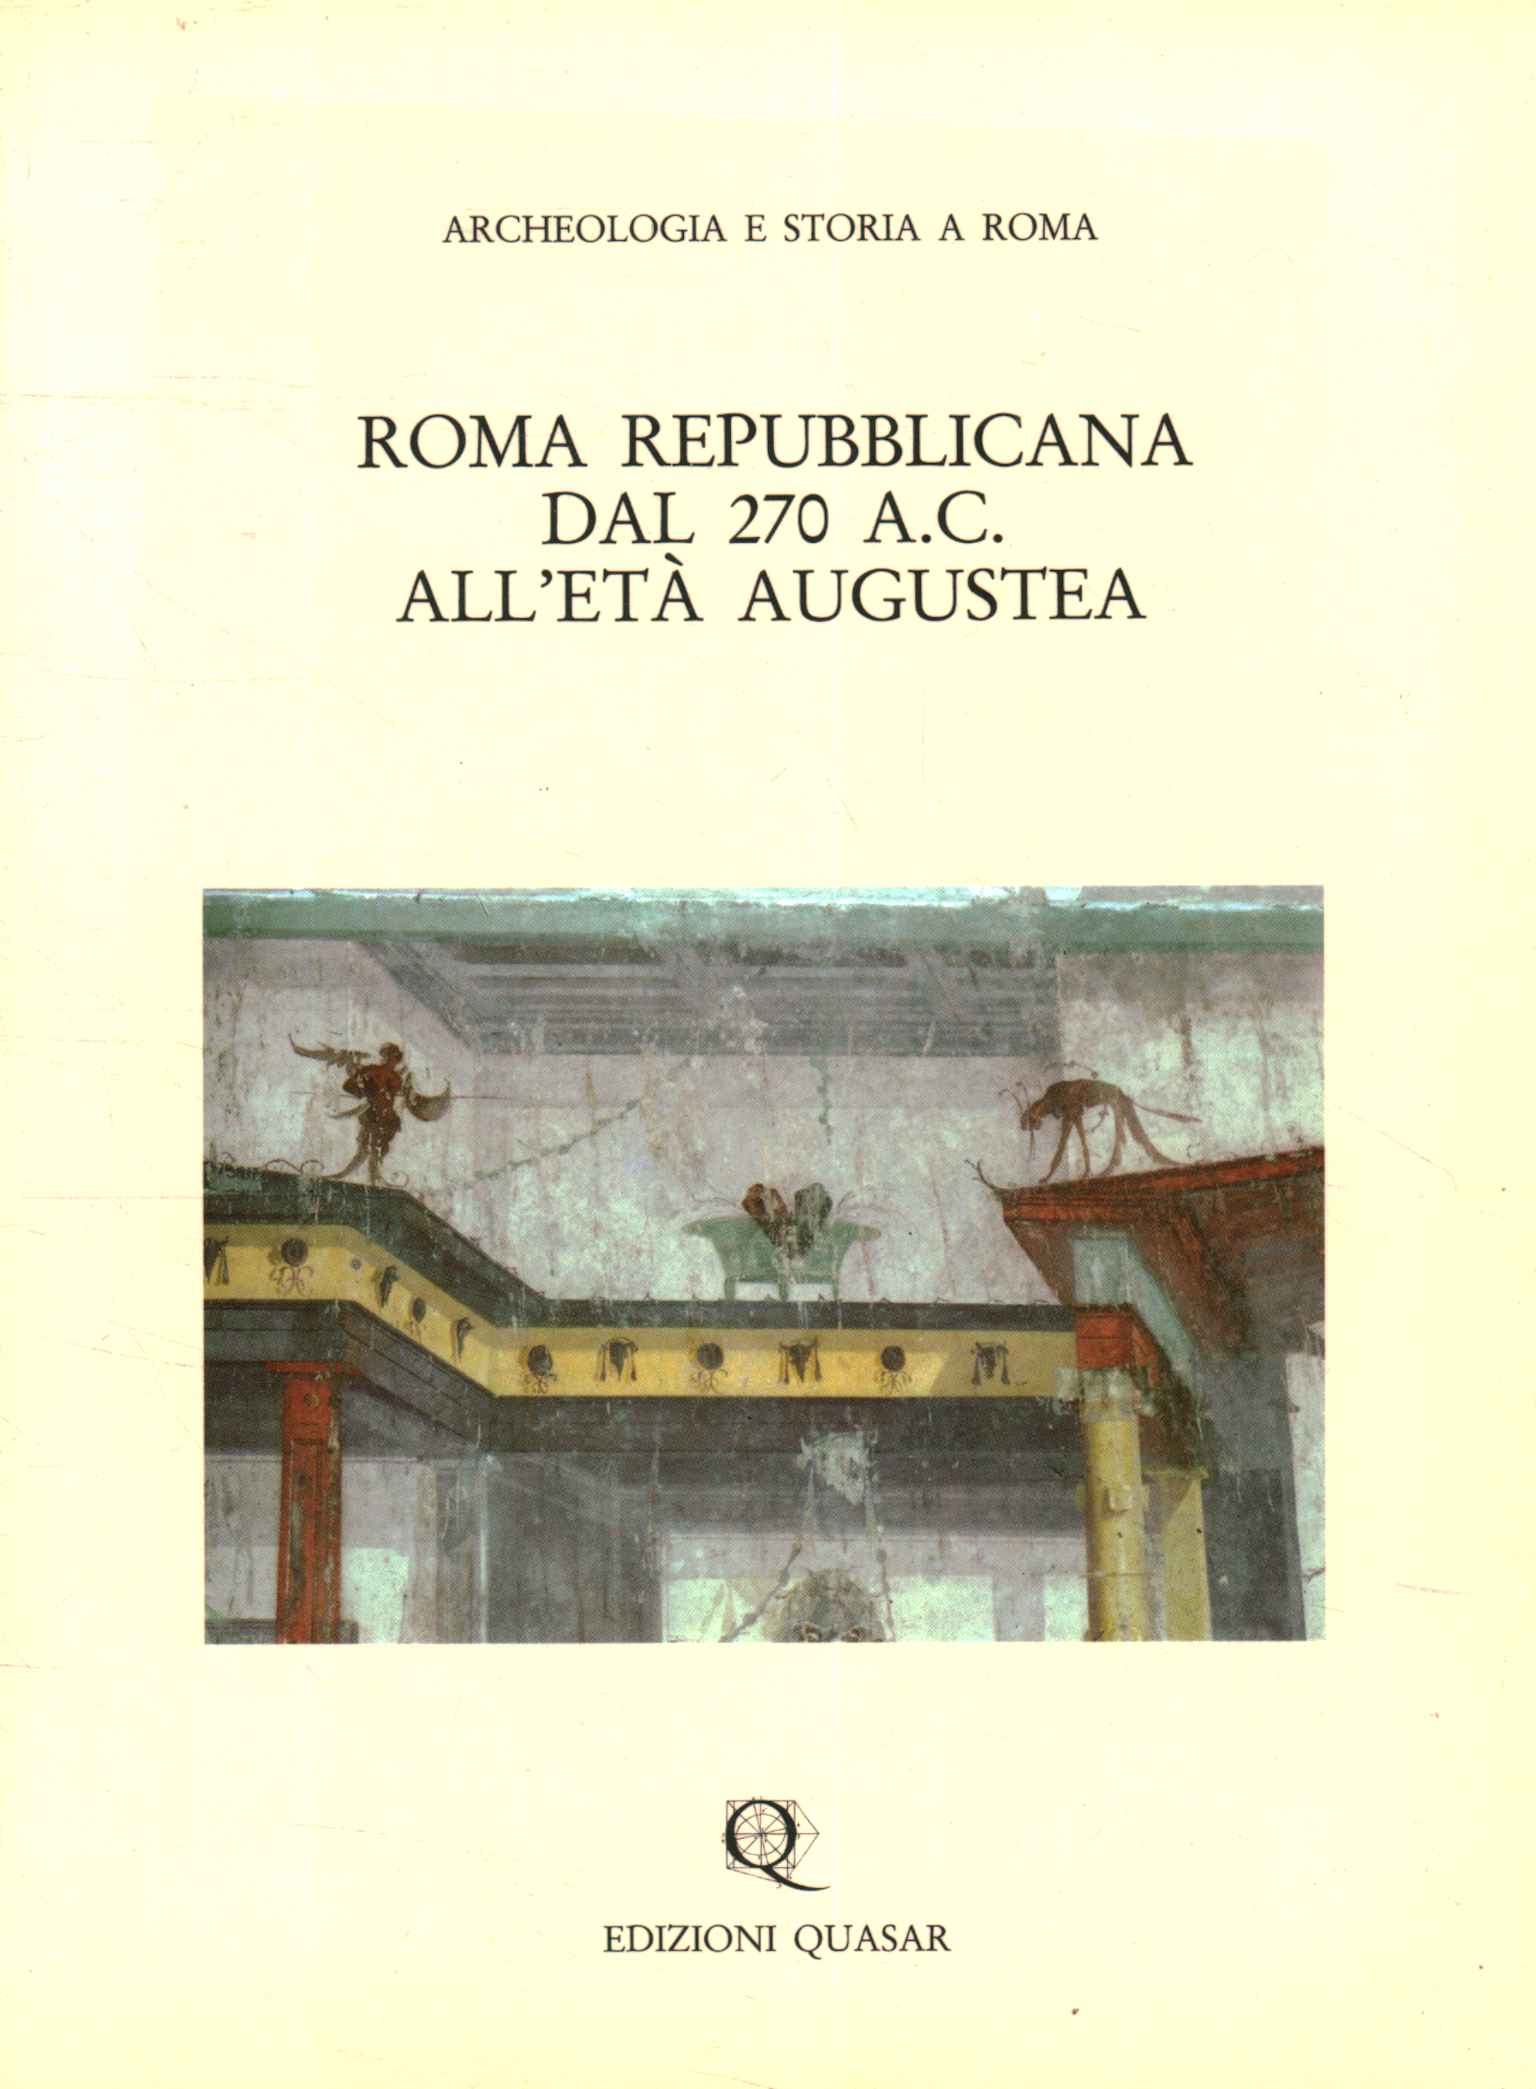 Republikanisches Rom ab 270 v. Chr zum Beitrag